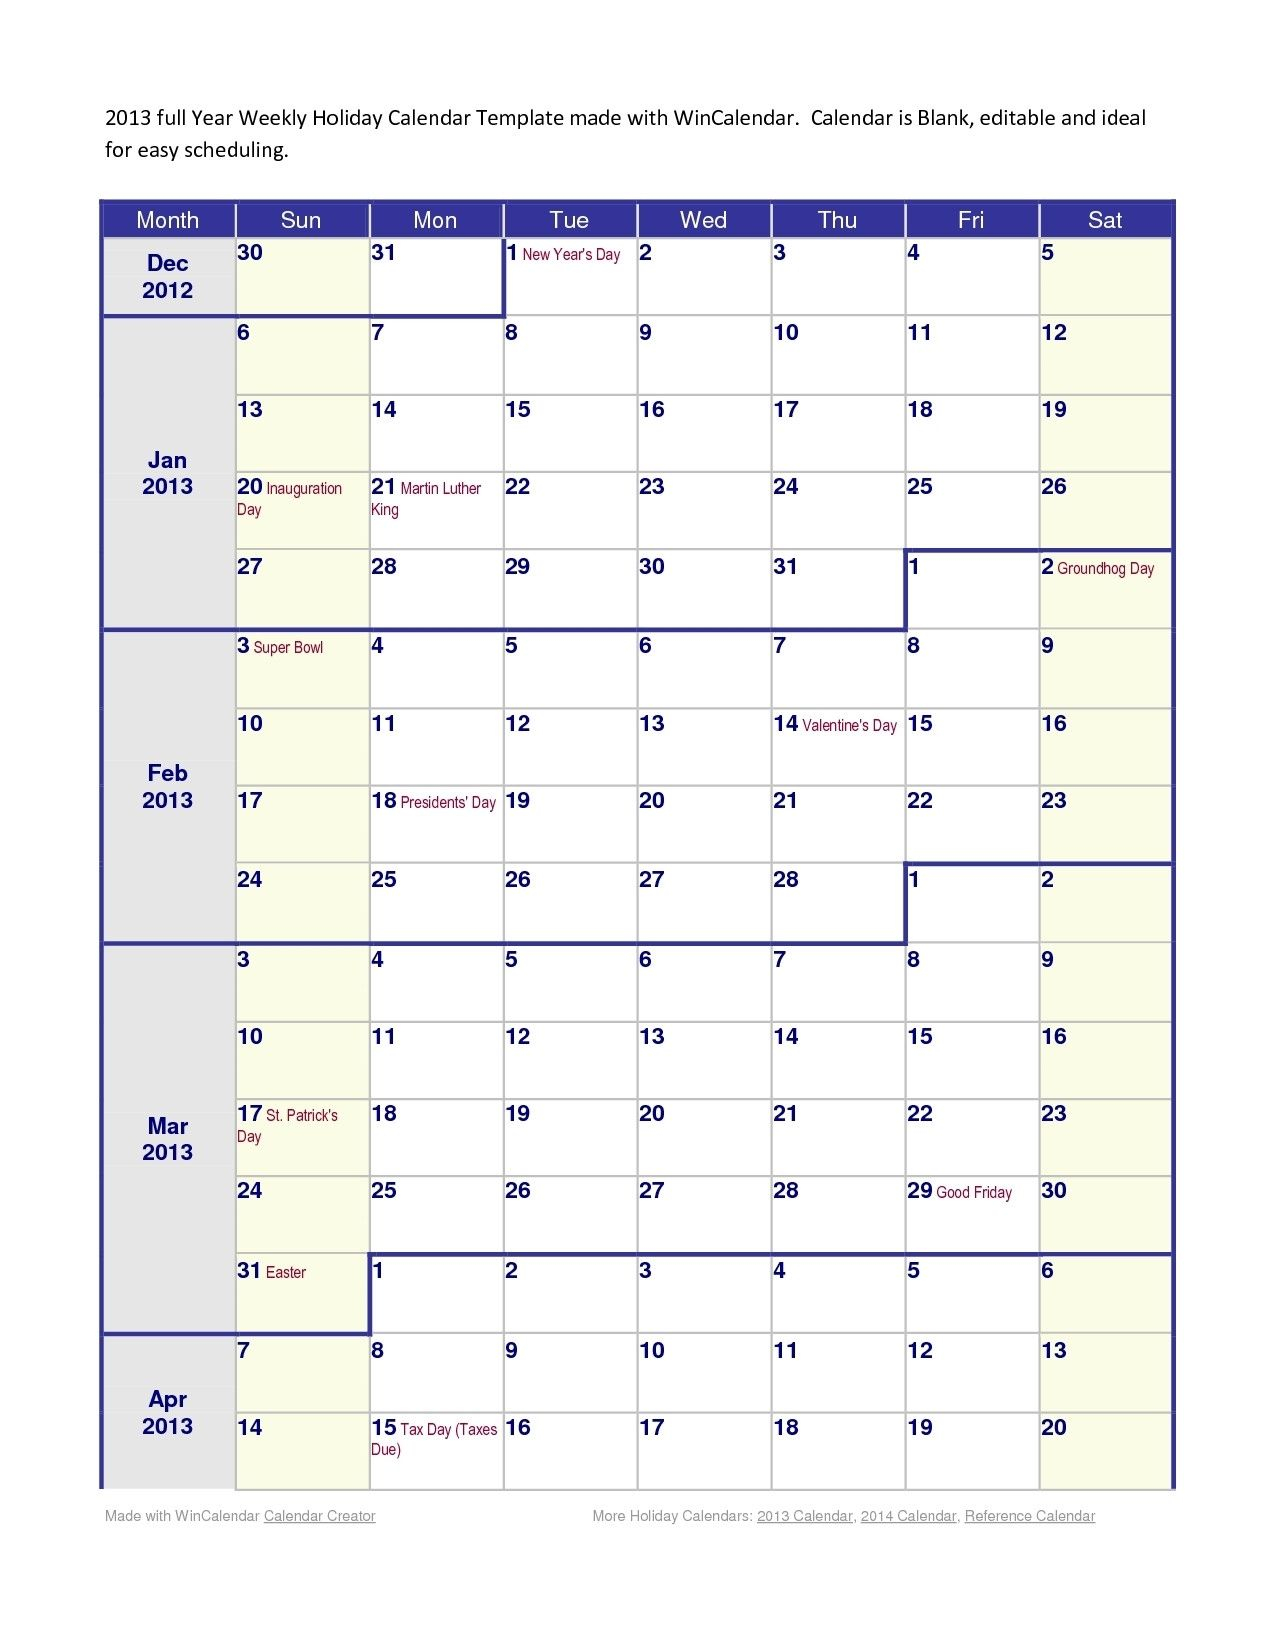 starfall calendar leon county school van